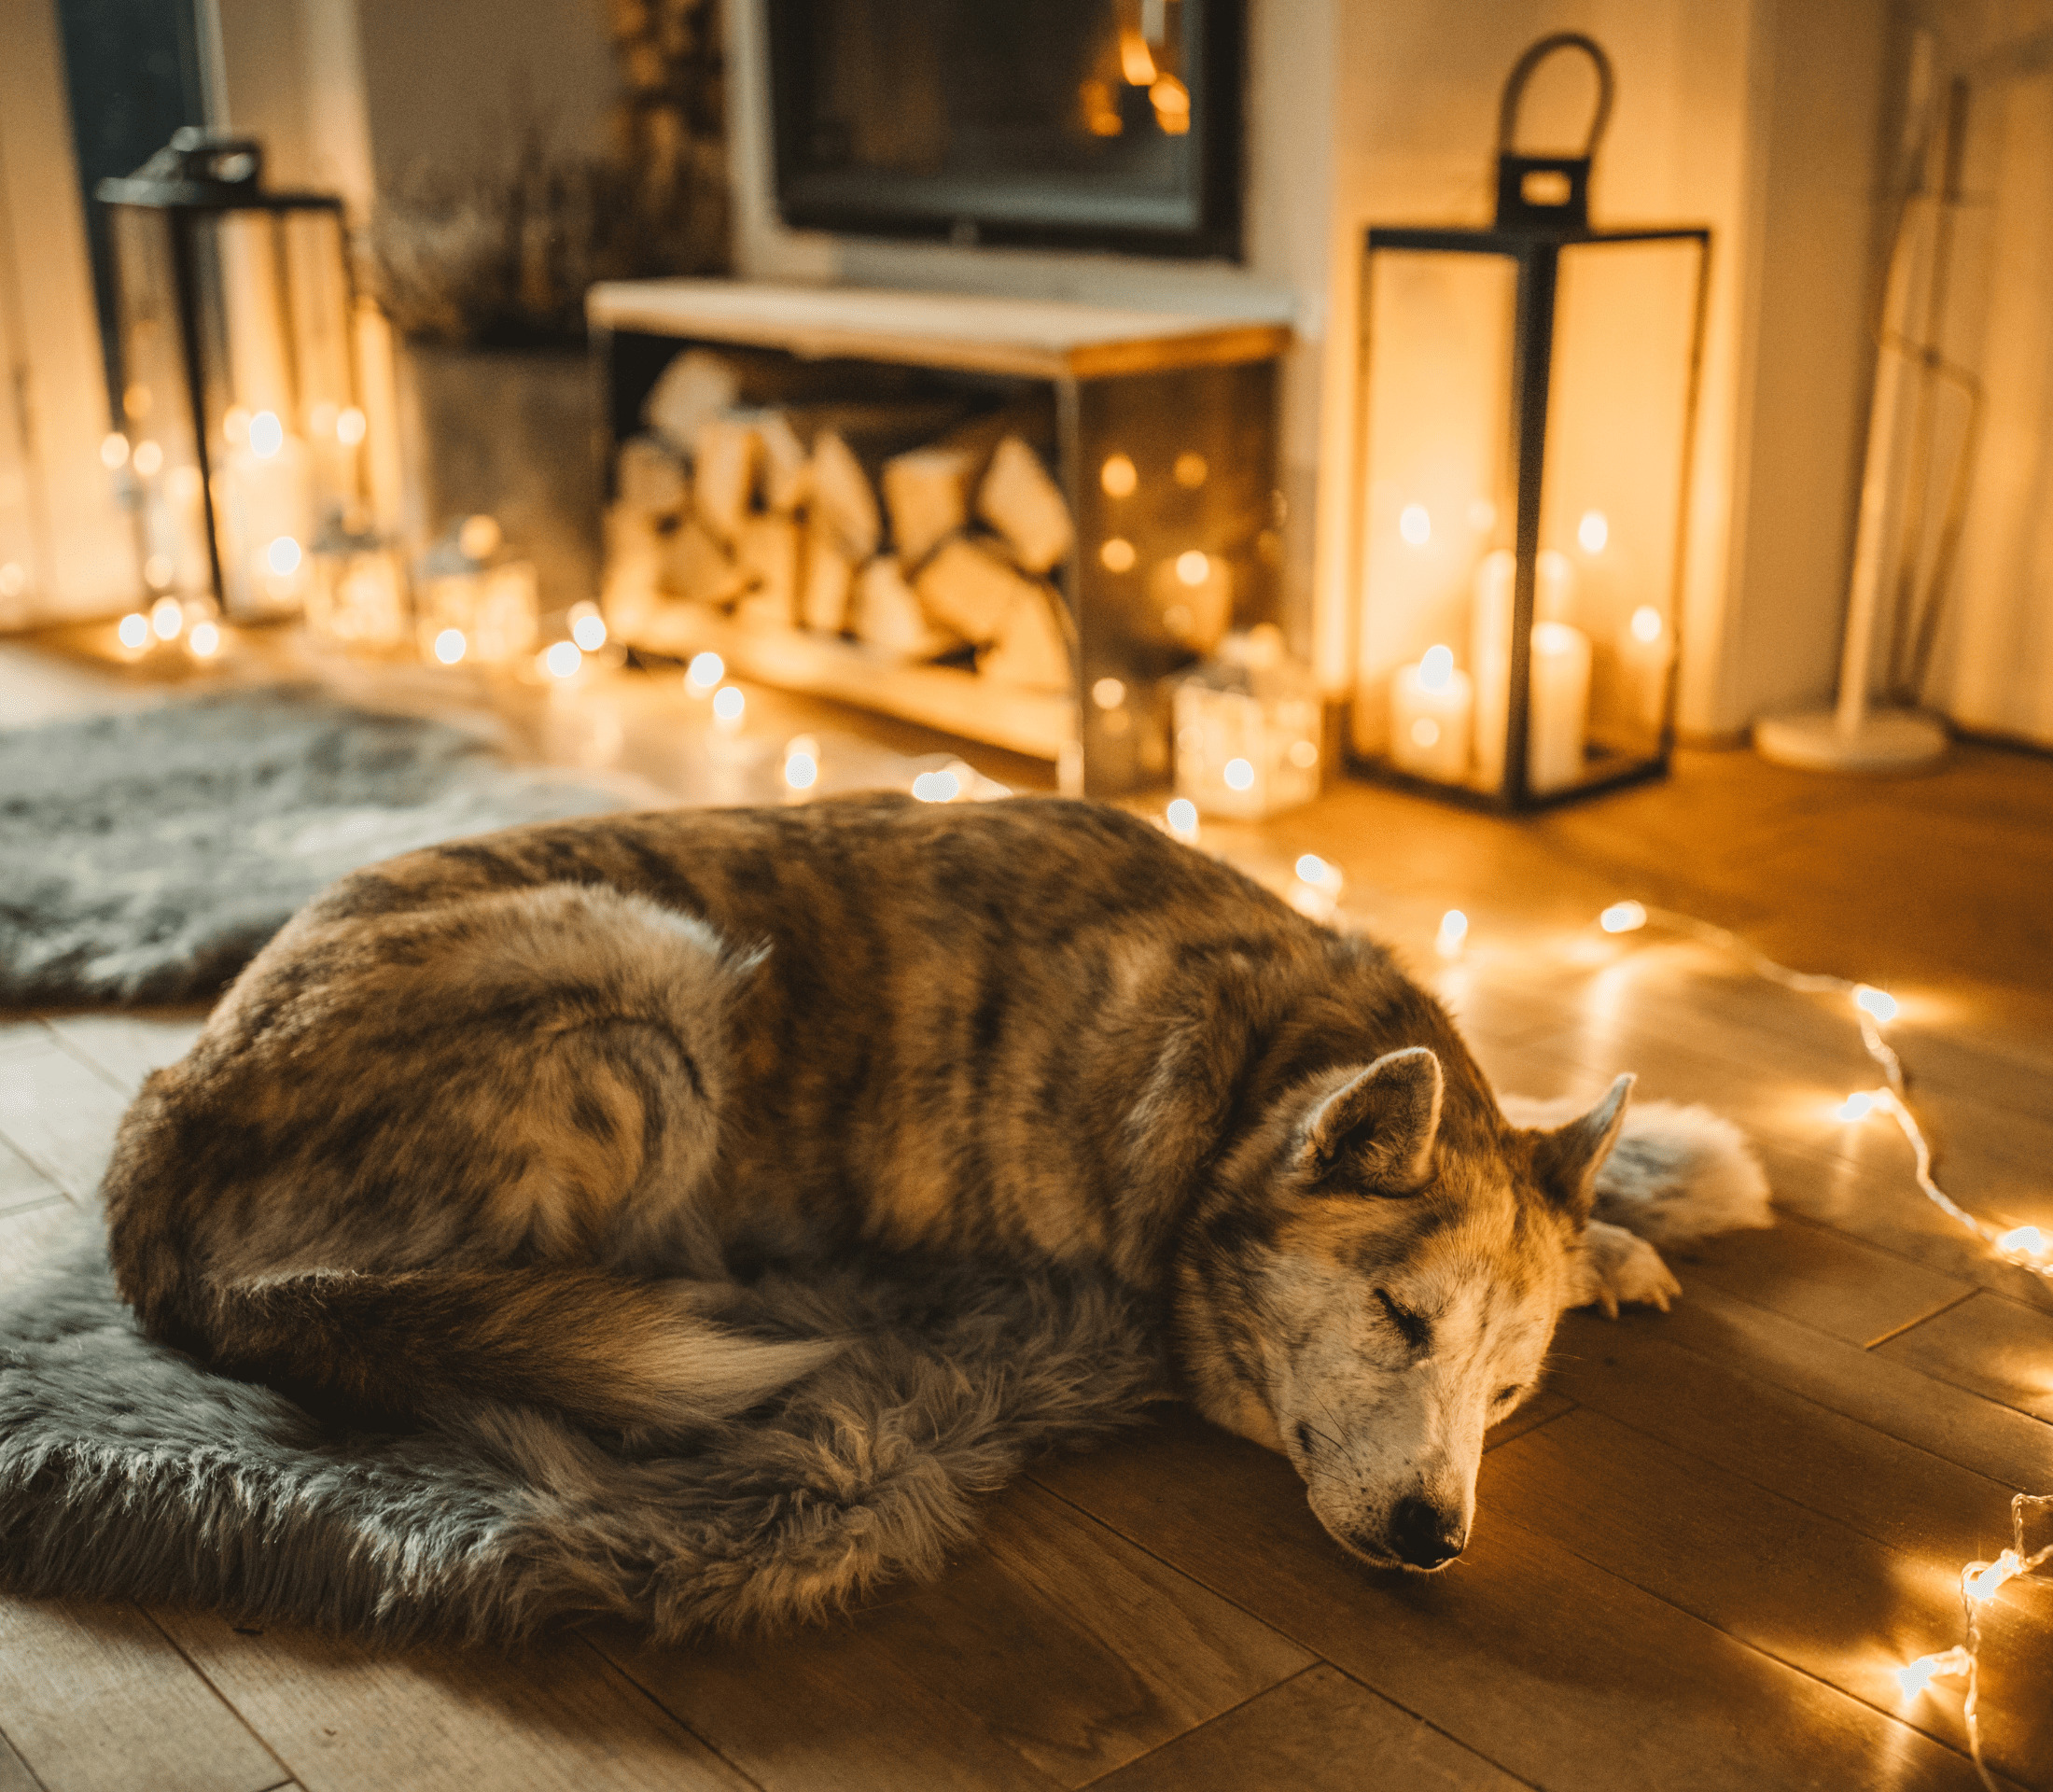 Brownish husky dog sleeping comfortably on the floor with string lights